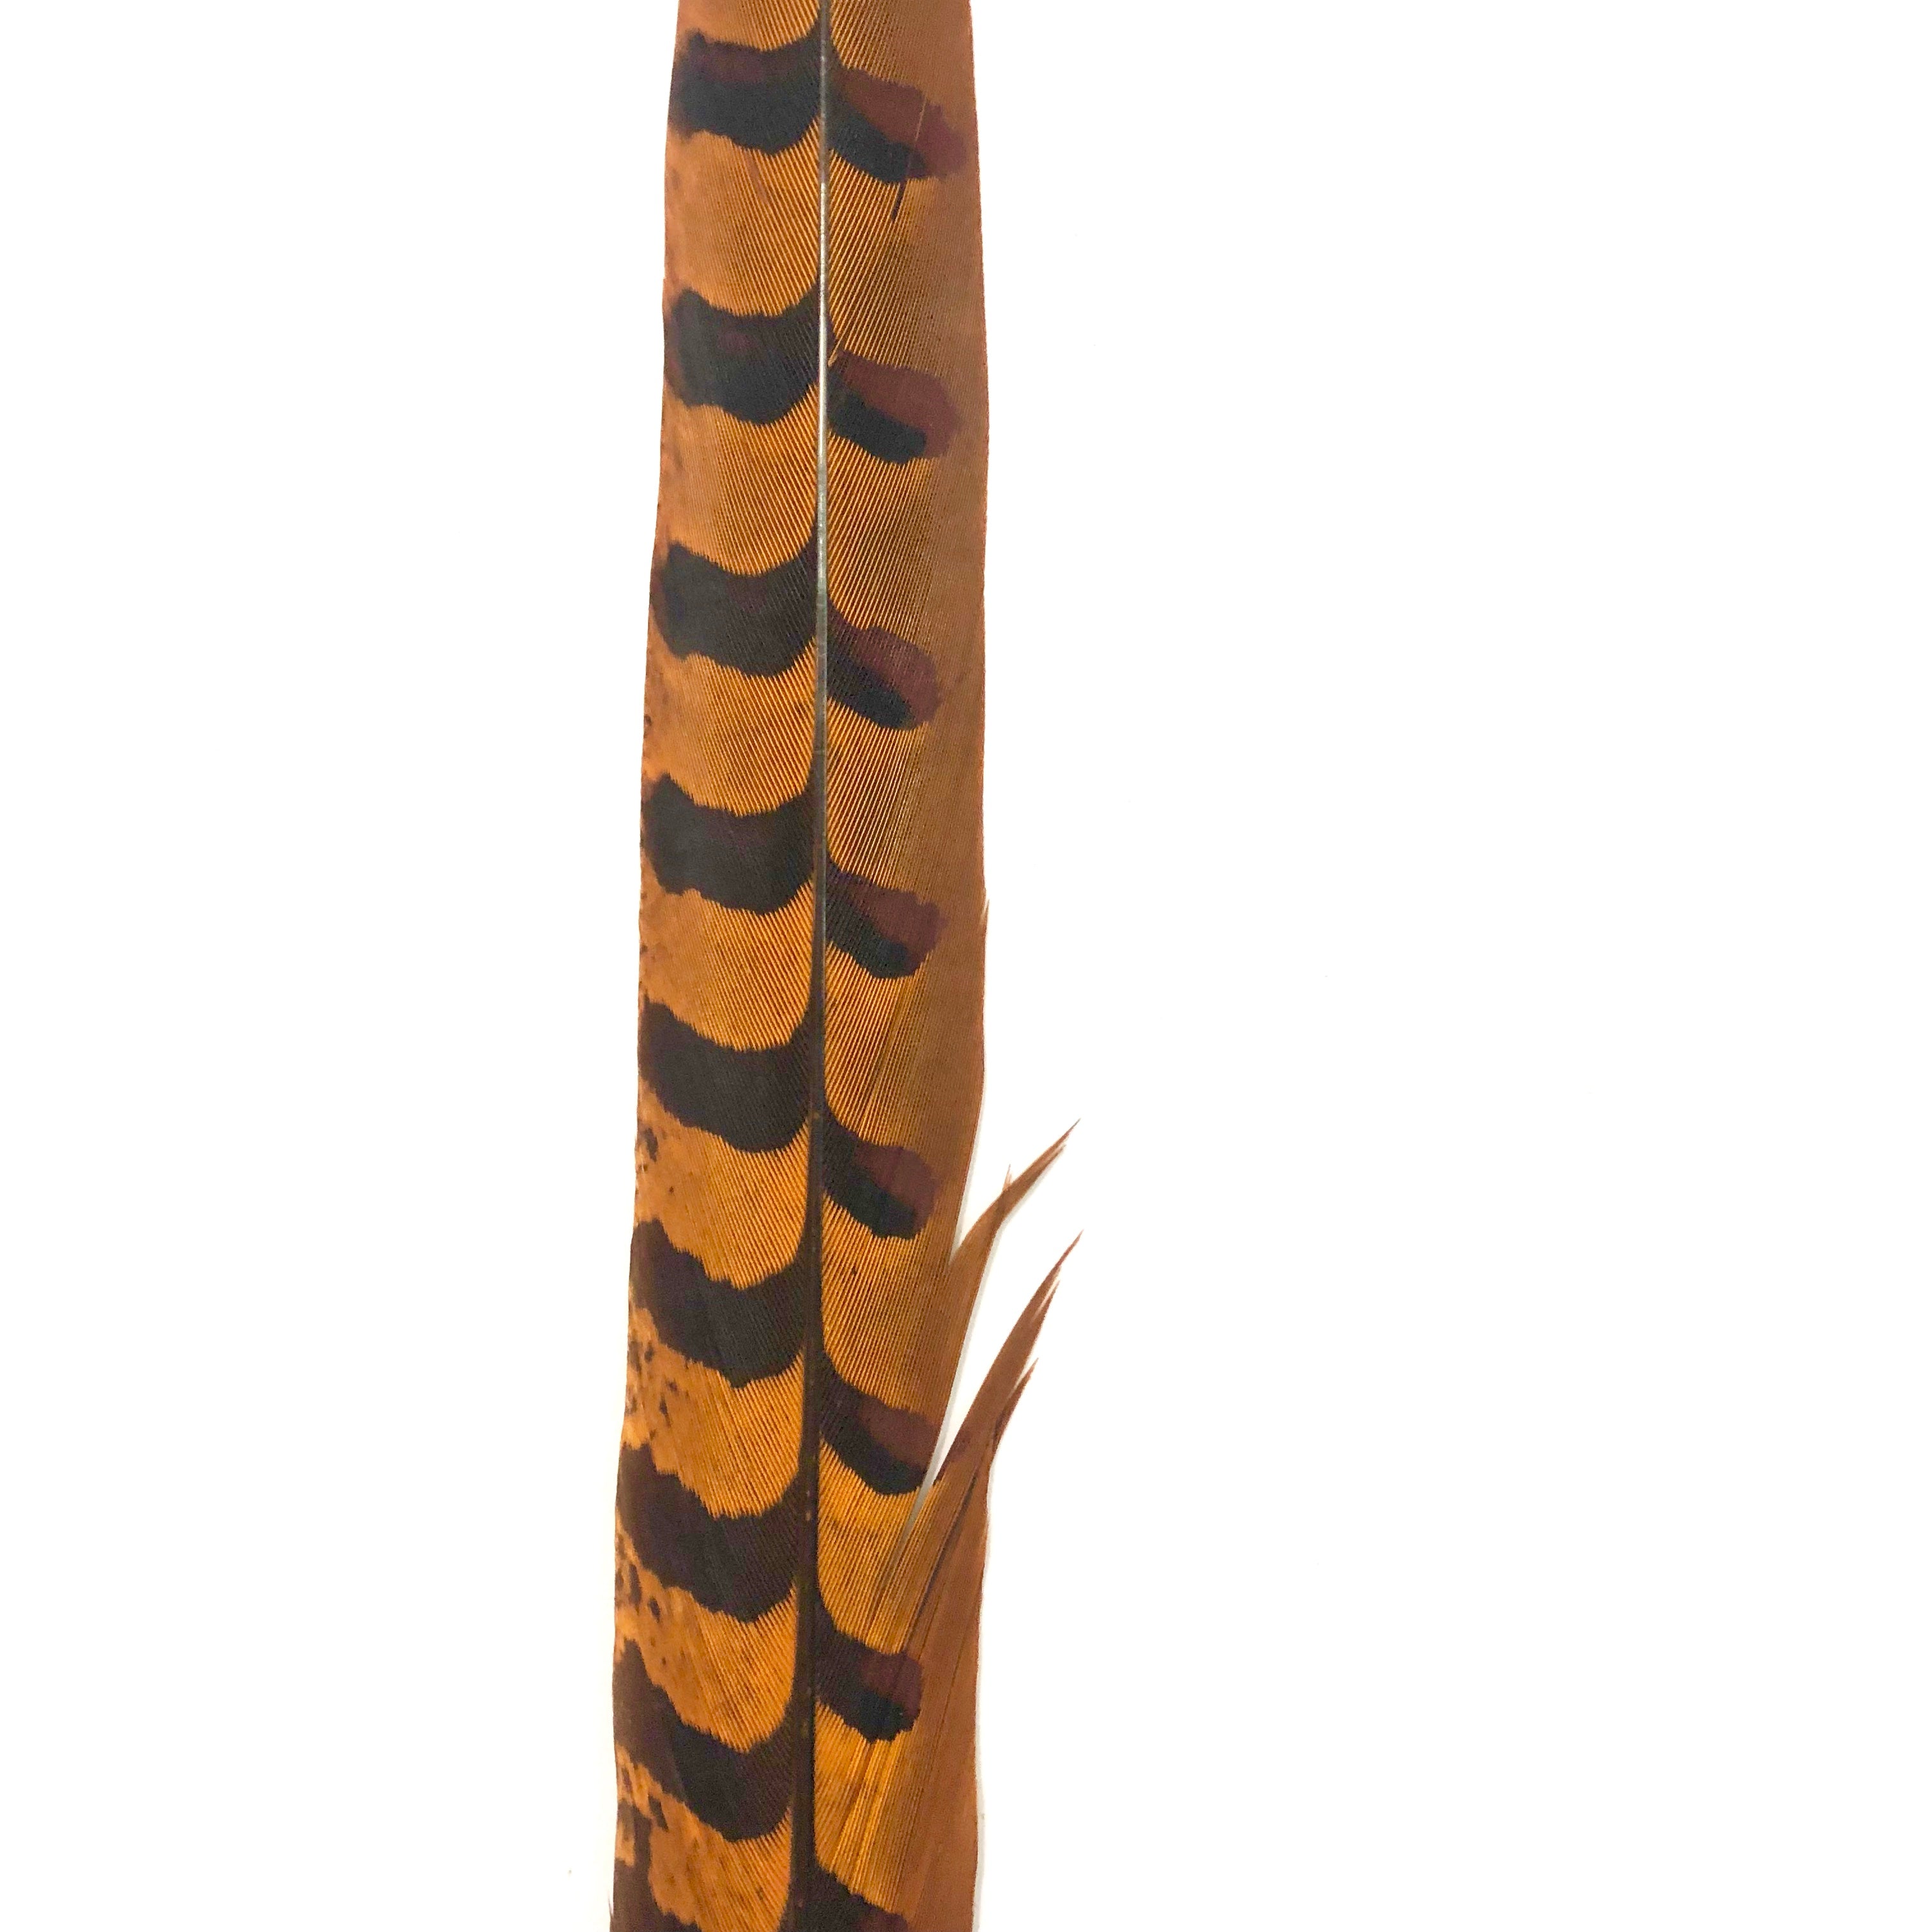 30" to 32" Reeves Pheasant Tail Feather - Orange